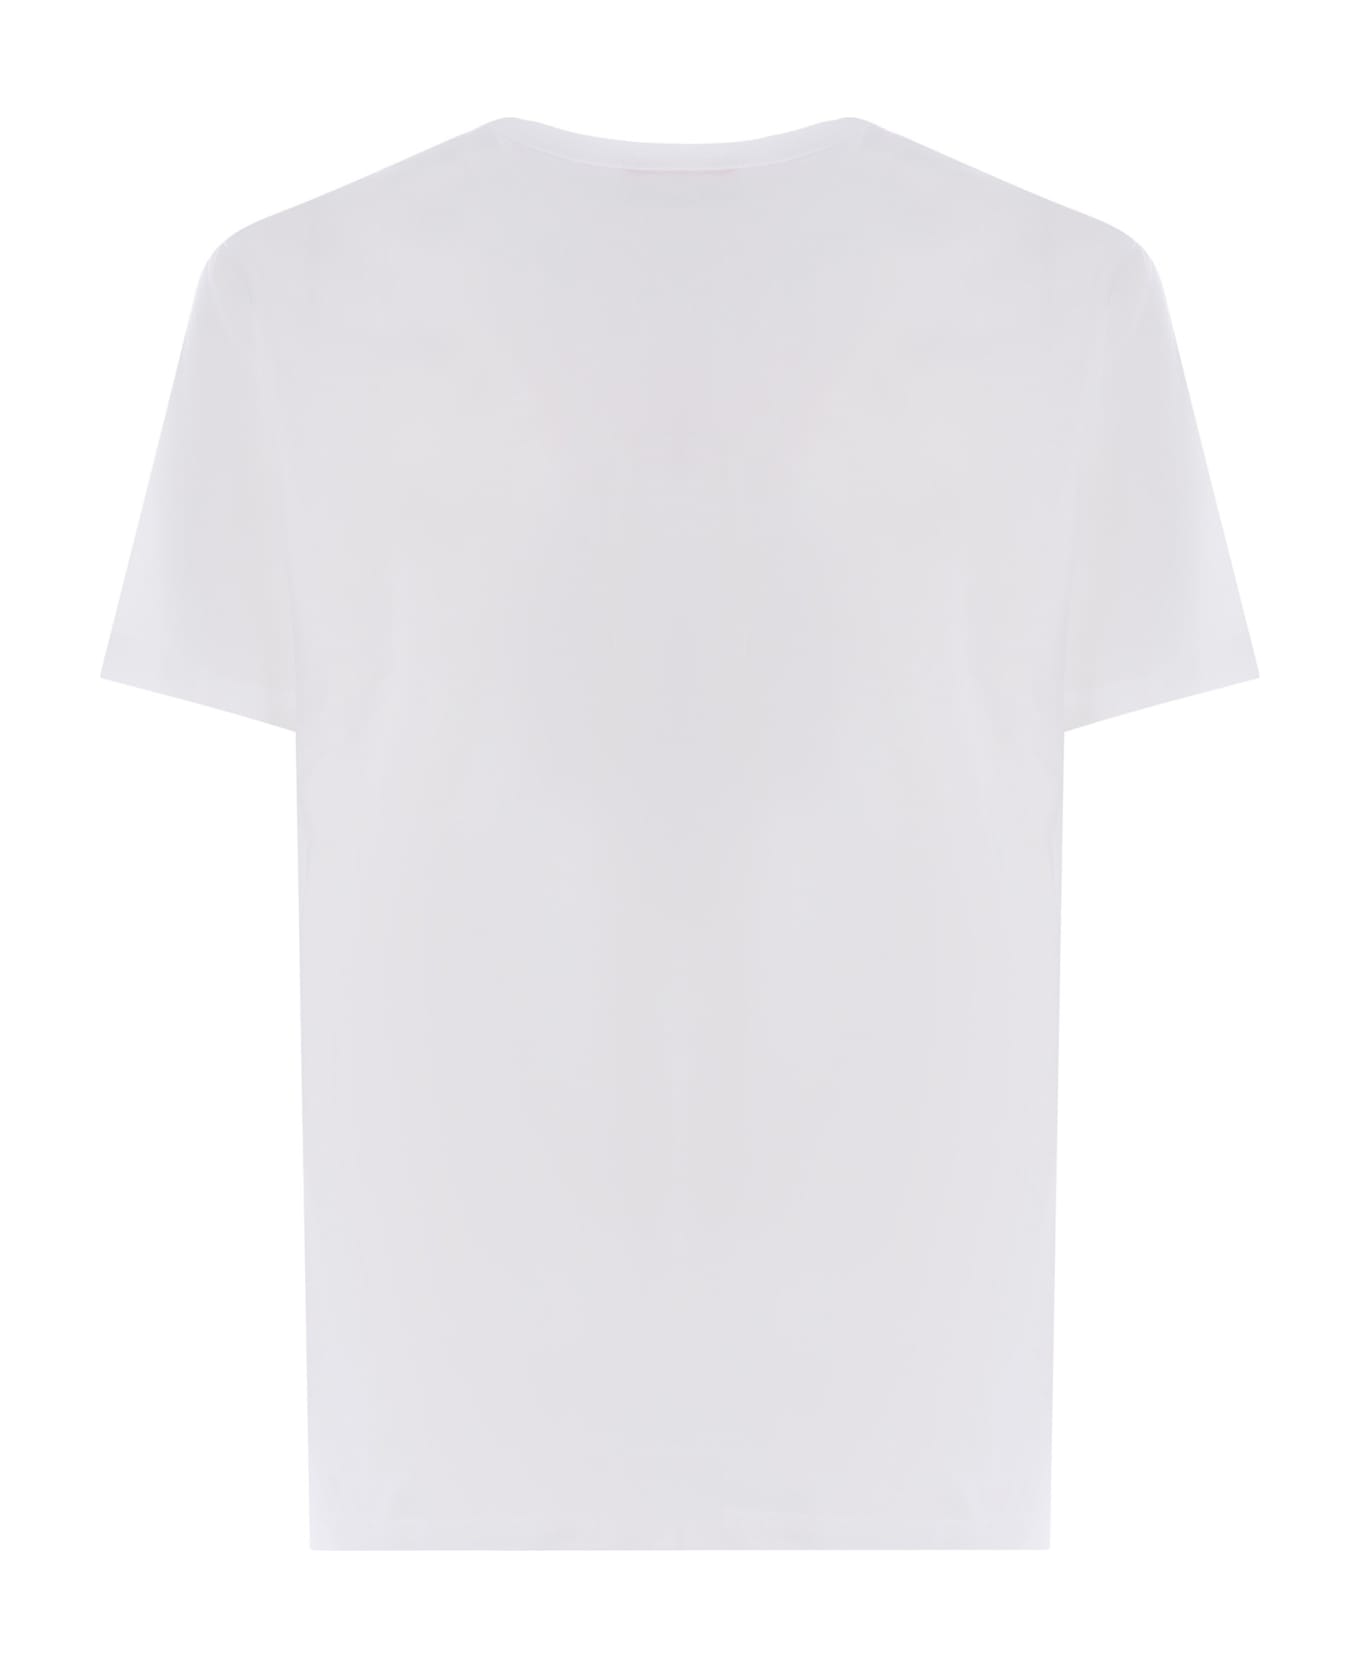 Diesel T-just-od T-shirt - White